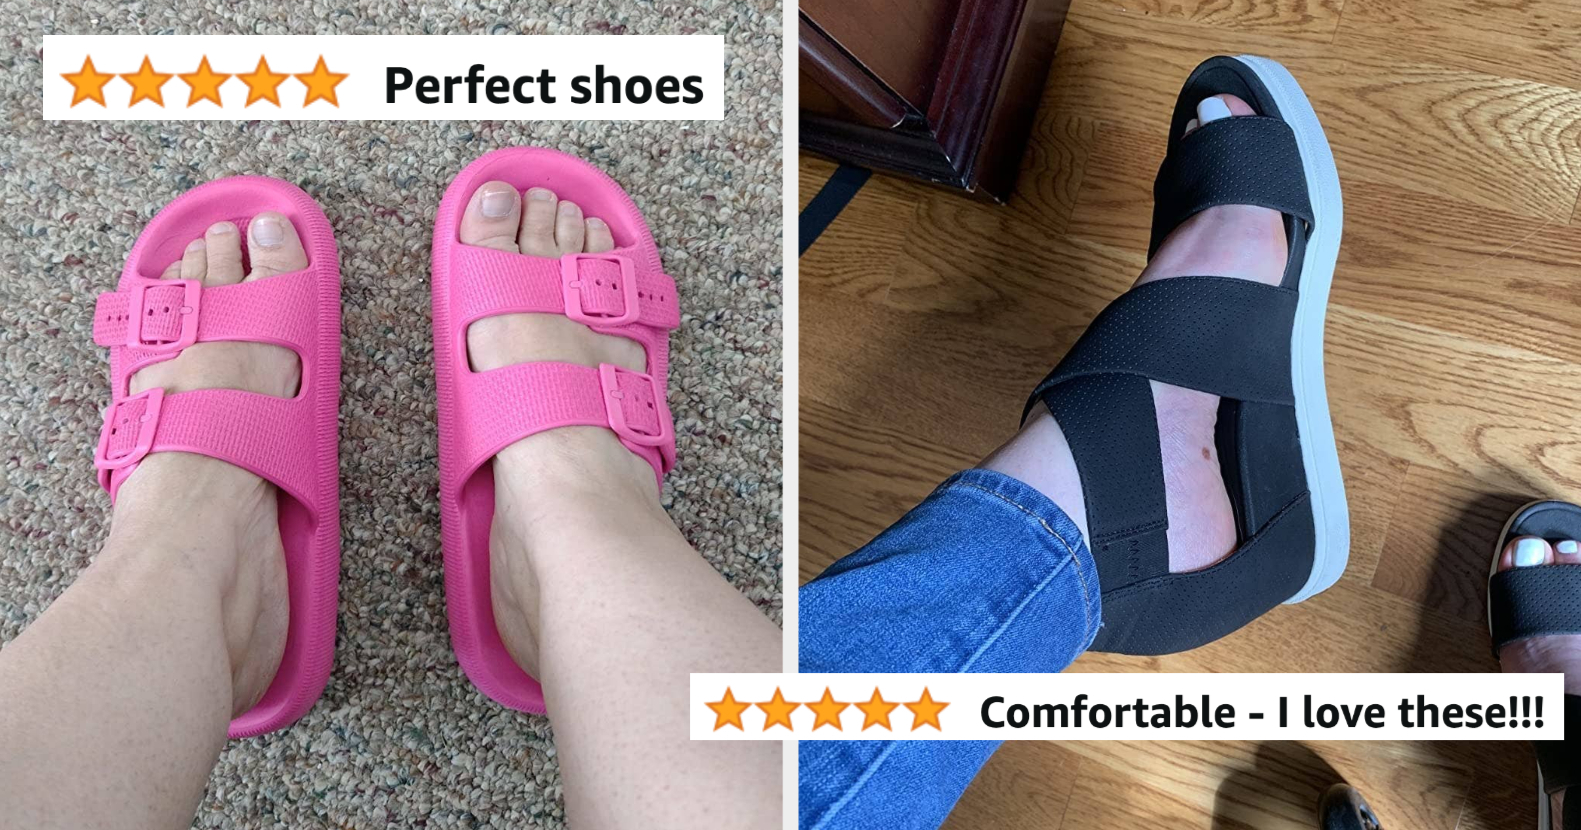 Women's Platform Sports Sandals, Casual Open Toe Cut-out Slip On Shoes,  Comfort Outdoor Sandals